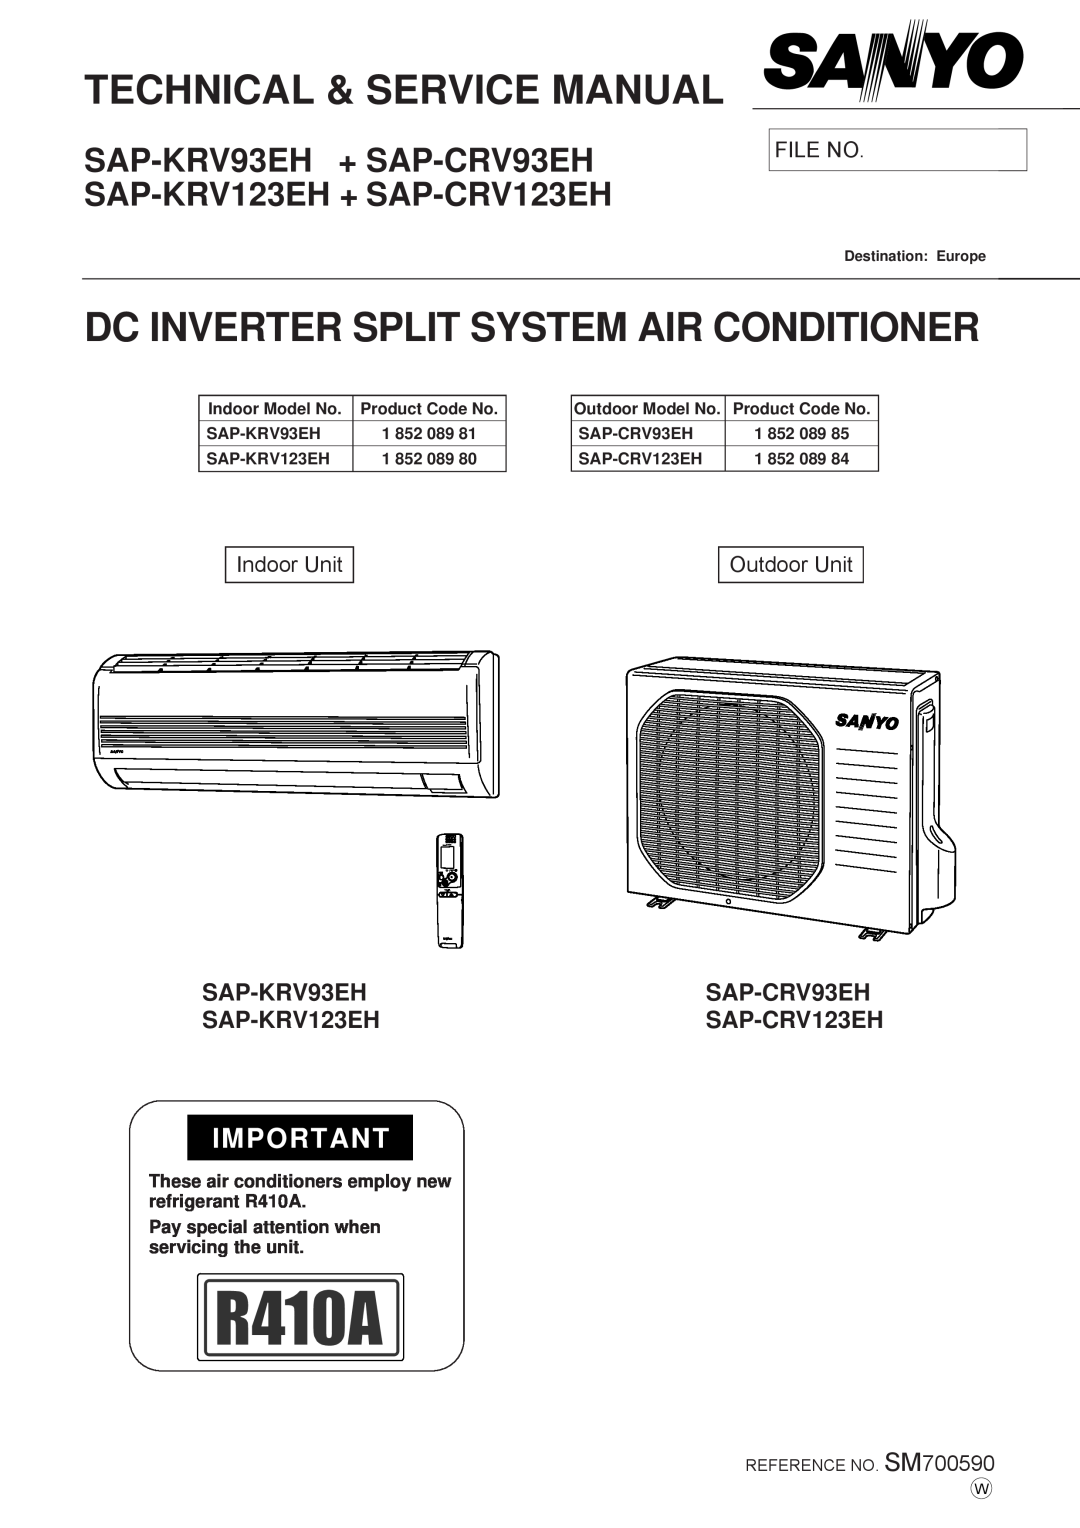 Sanyo SAP-KRV93EH service manual Dc Inverter Split System Air Conditioner, SAP-CRV93EH, SAP-KRV123EH, SAP-CRV123EH, 1 852 